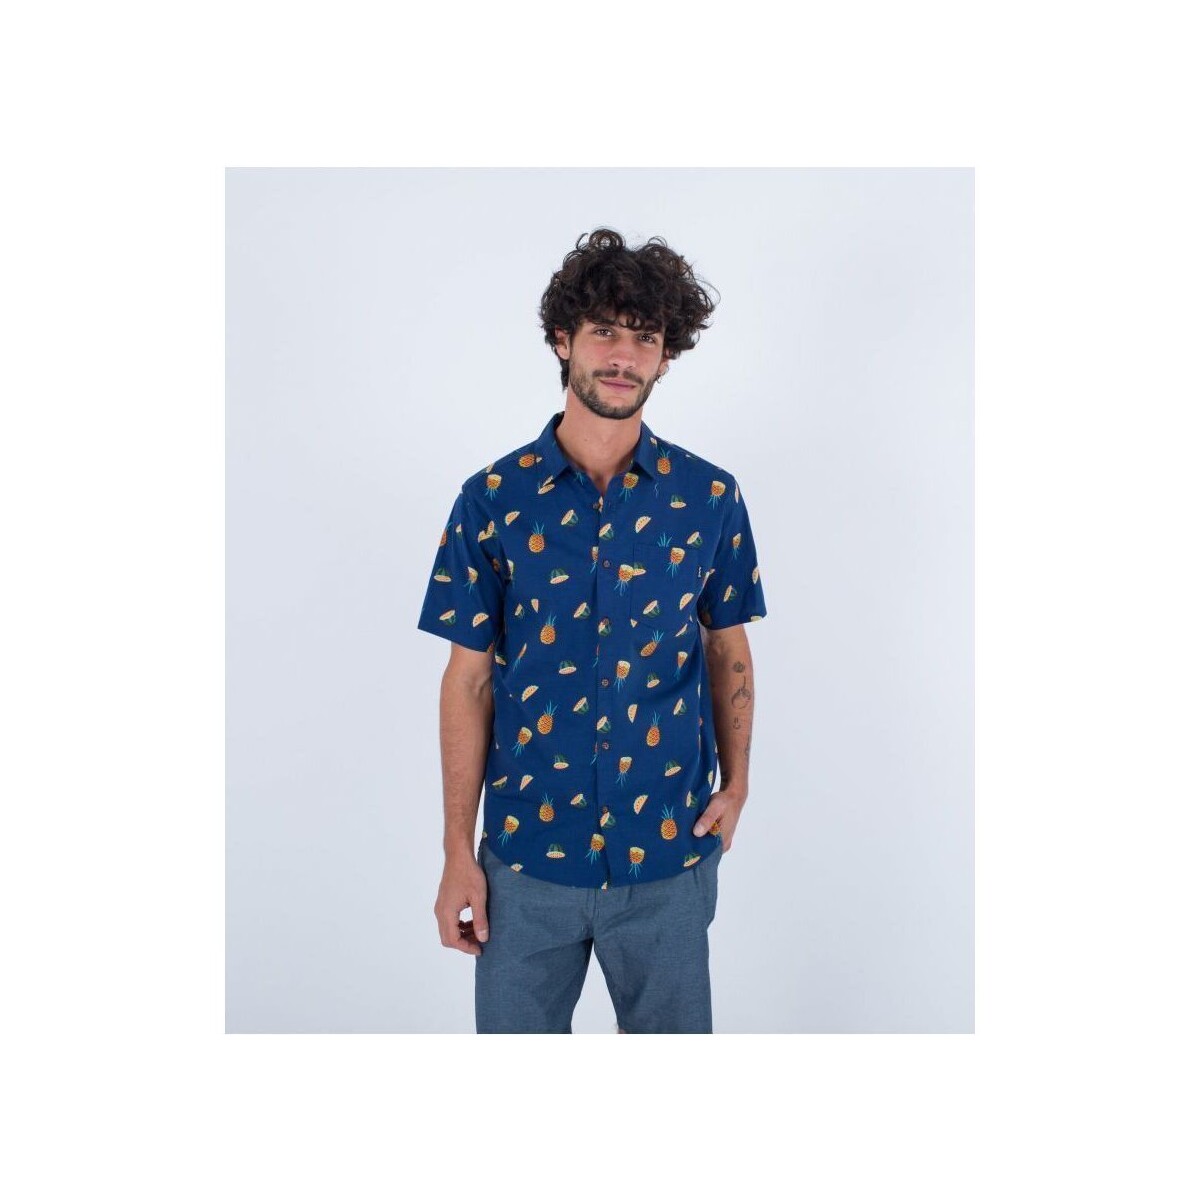 textil Hombre Camisas manga larga Hurley MVS0005570 ONLY LIDO-H4024 ABYSS Azul